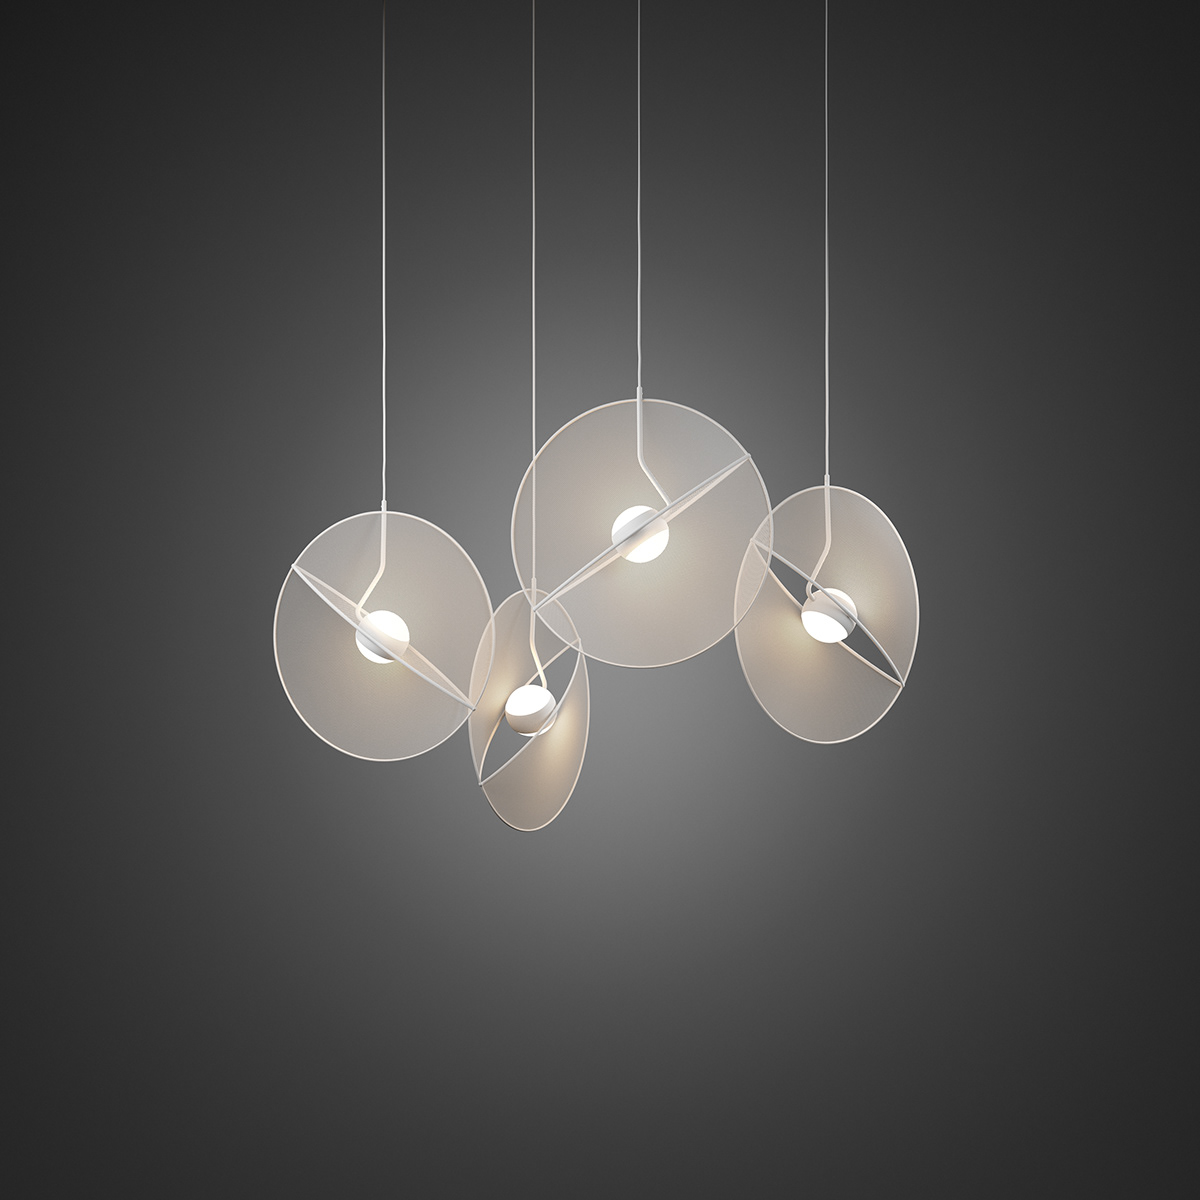 alexey danilin Awards Lamp lighting Lighting Design  Maytoni pendant product product design  product designer